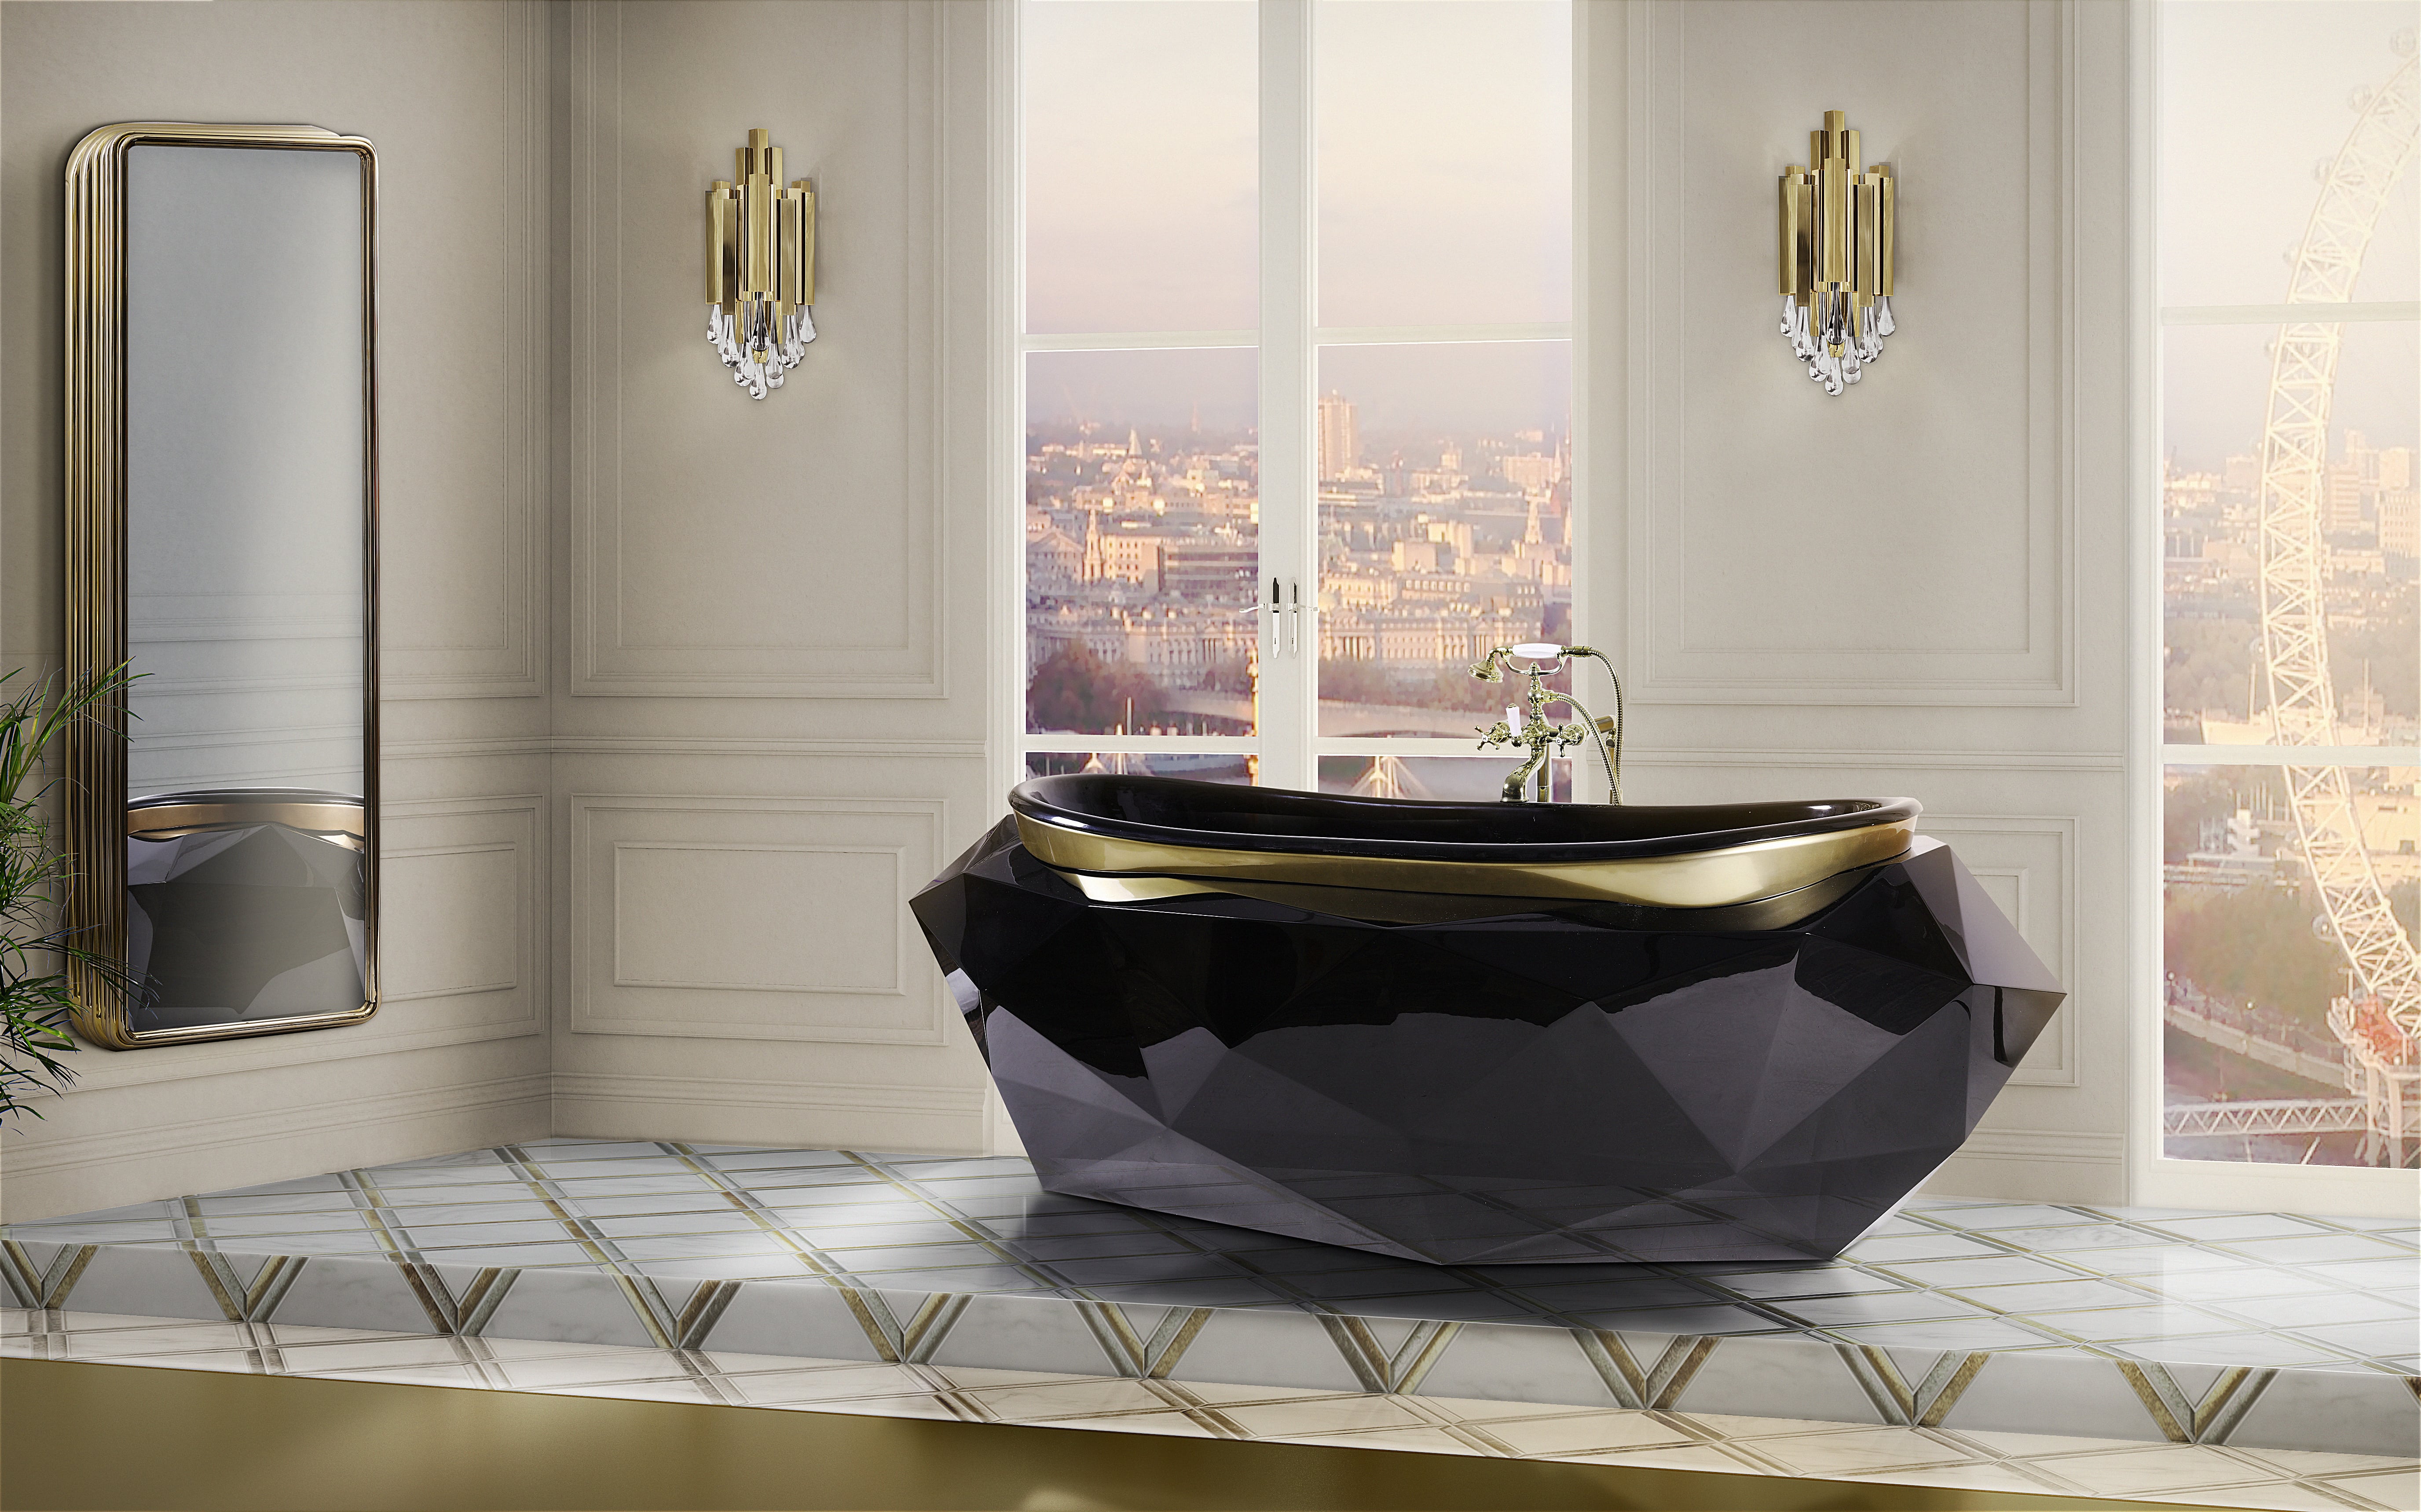 6 Magical Ideas For Your Modern Bathroom Decor.home décor.bathroom decoration.#surfaces#storageproblems. Read more:http://www.maisonvalentina.net/en/inspiration-and-ideas/sem-categoria/magical-ideas-modern-bathroom-decor